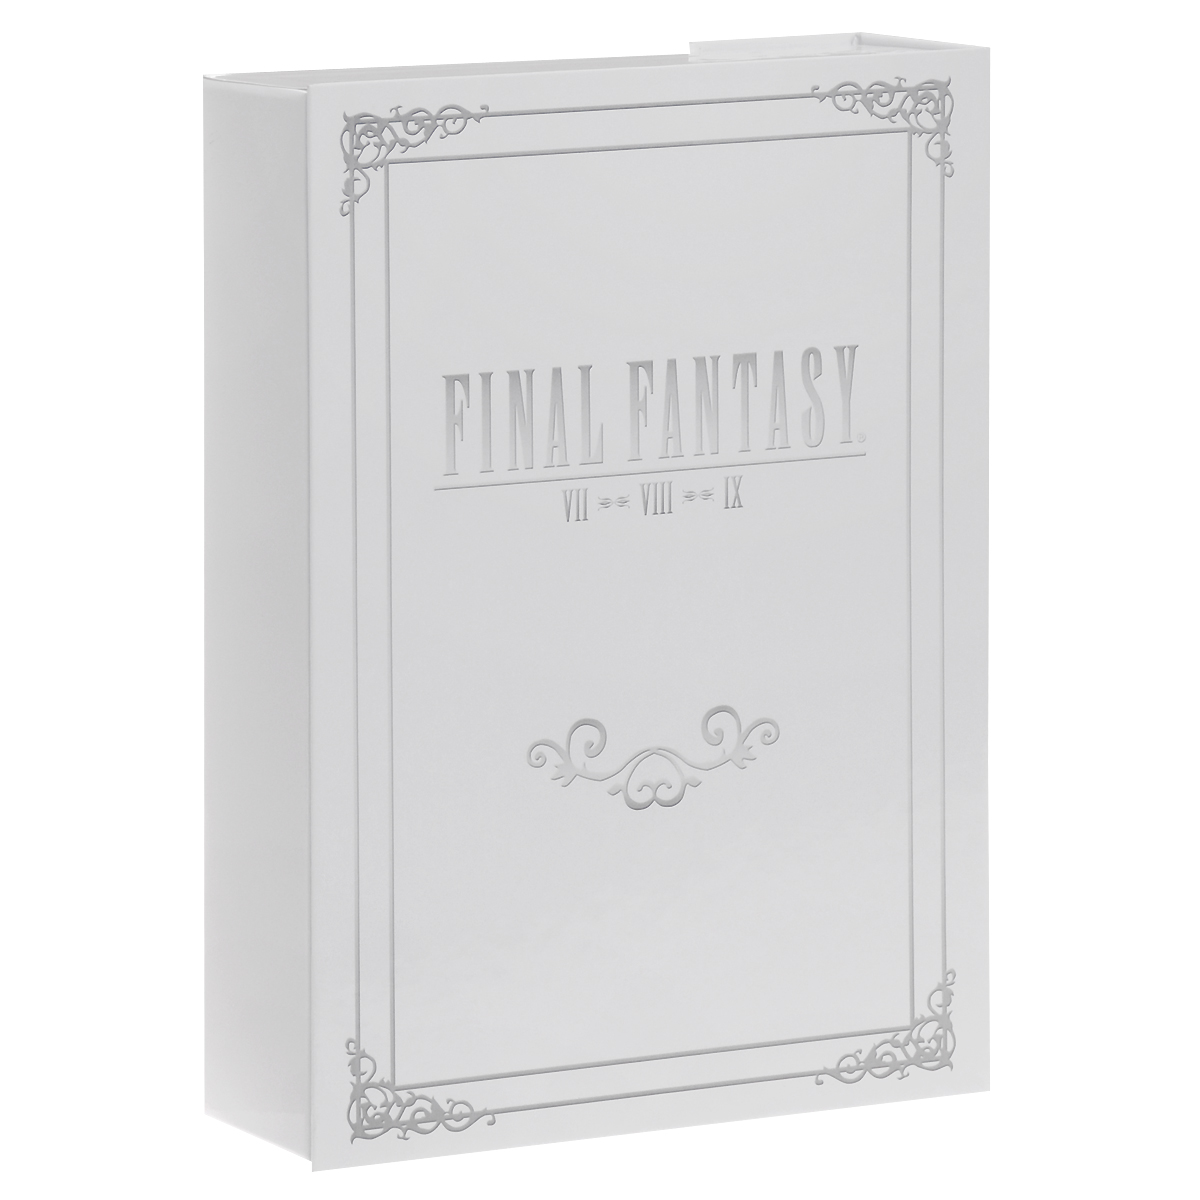 Final Fantasy VII, VIII, IX (комплект из 3 книг)